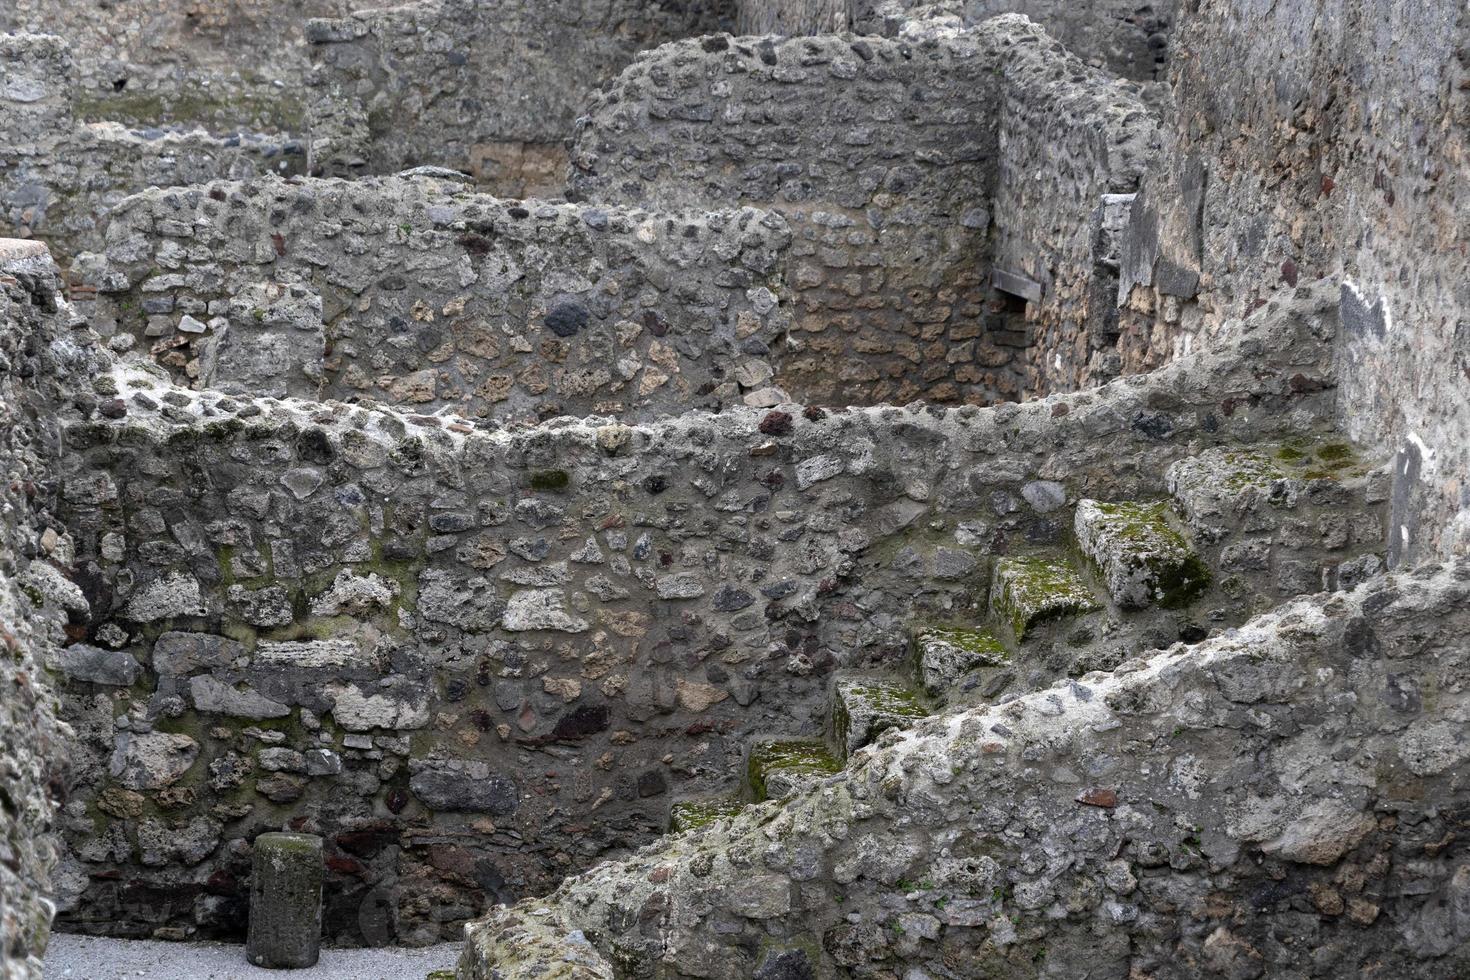 Pompeji ruiniert Häuser foto